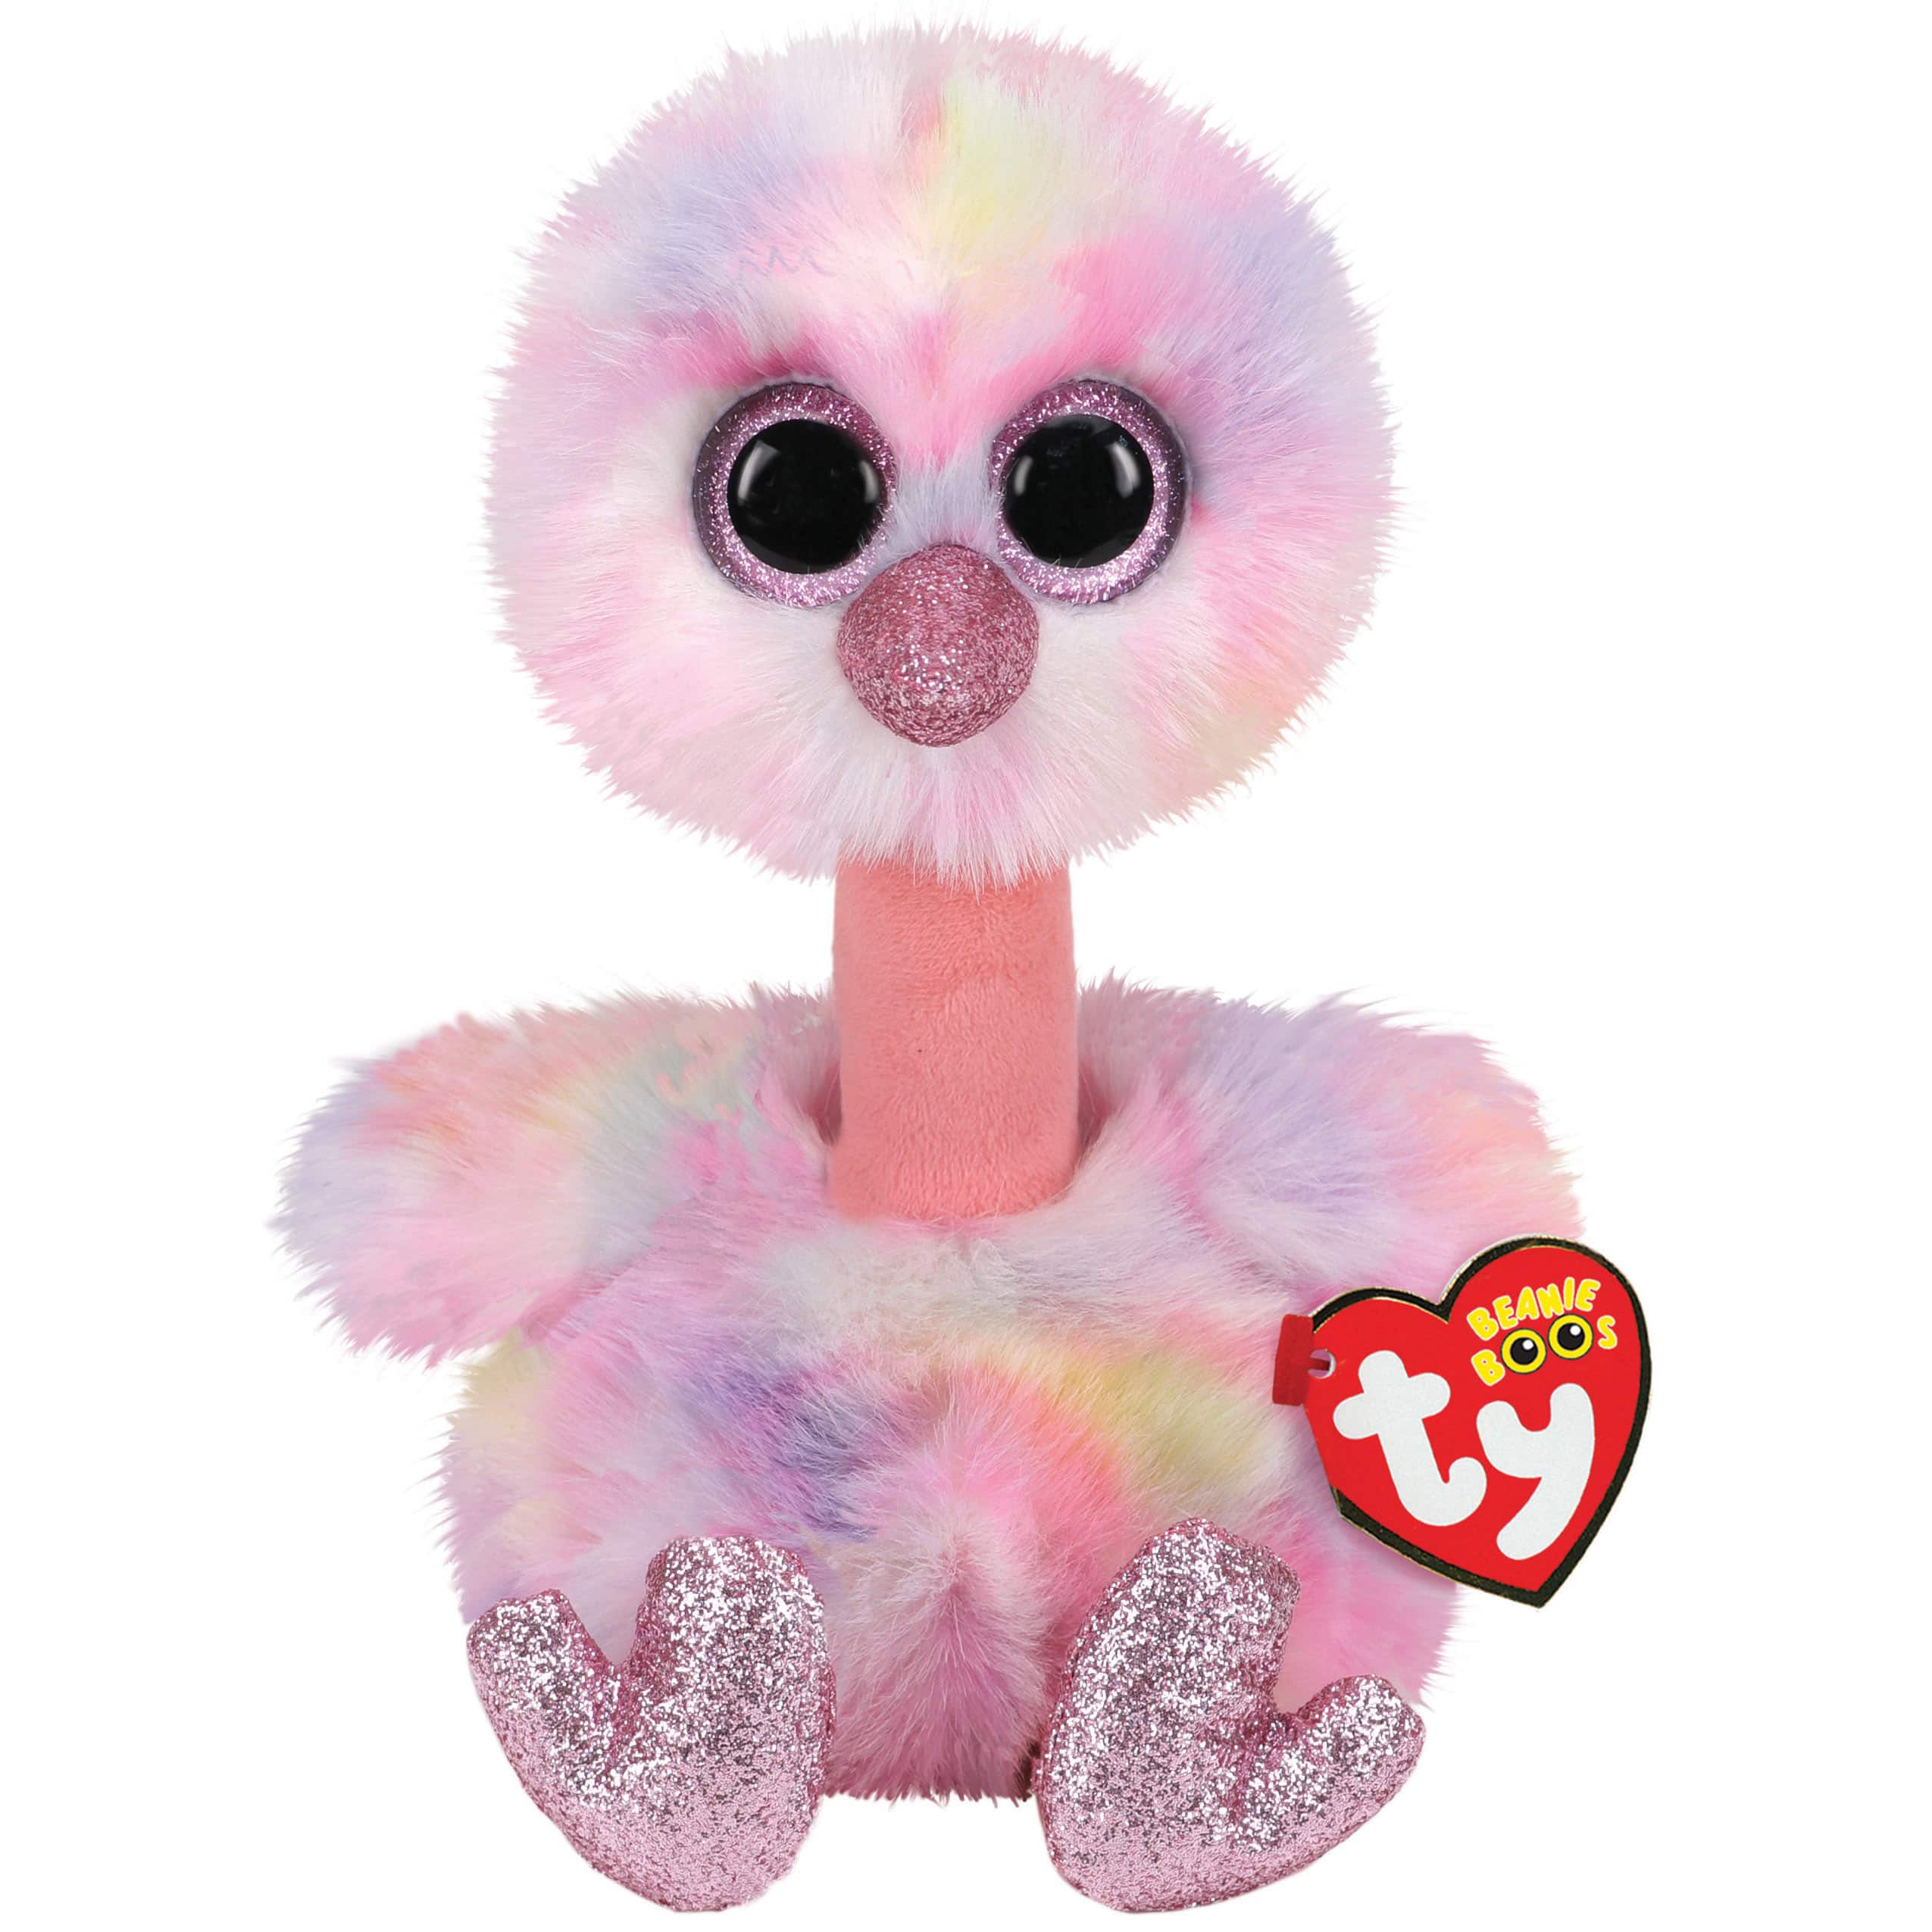 2019 TY Beanie Boos 9" Medium AVERY Pastel Ostrich Plush Stuffed Animal Toy MWMT 